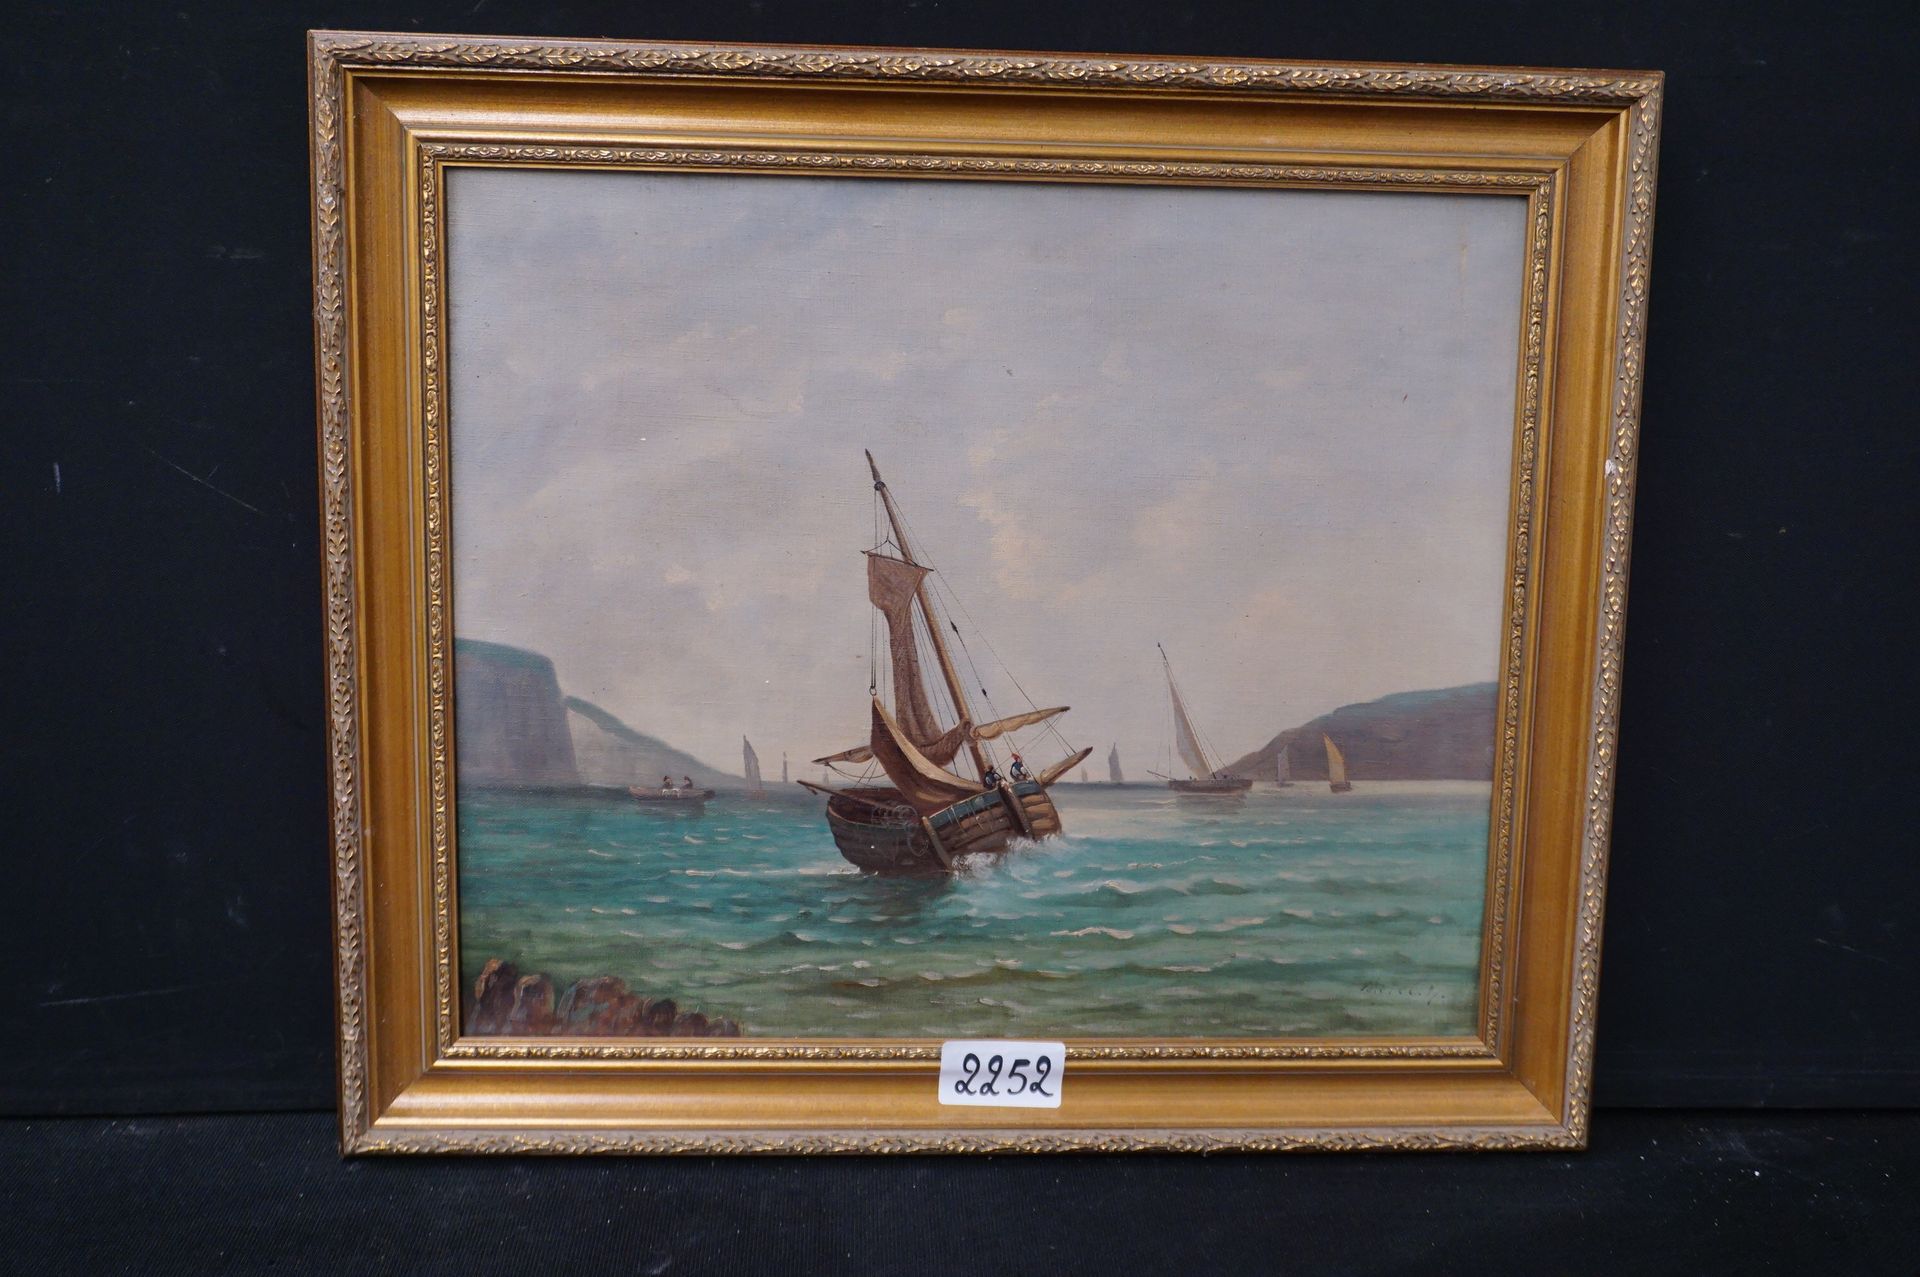 Null Gemälde - "Marine" - Öl auf Leinwand - Signiert - 46 x 55 cm